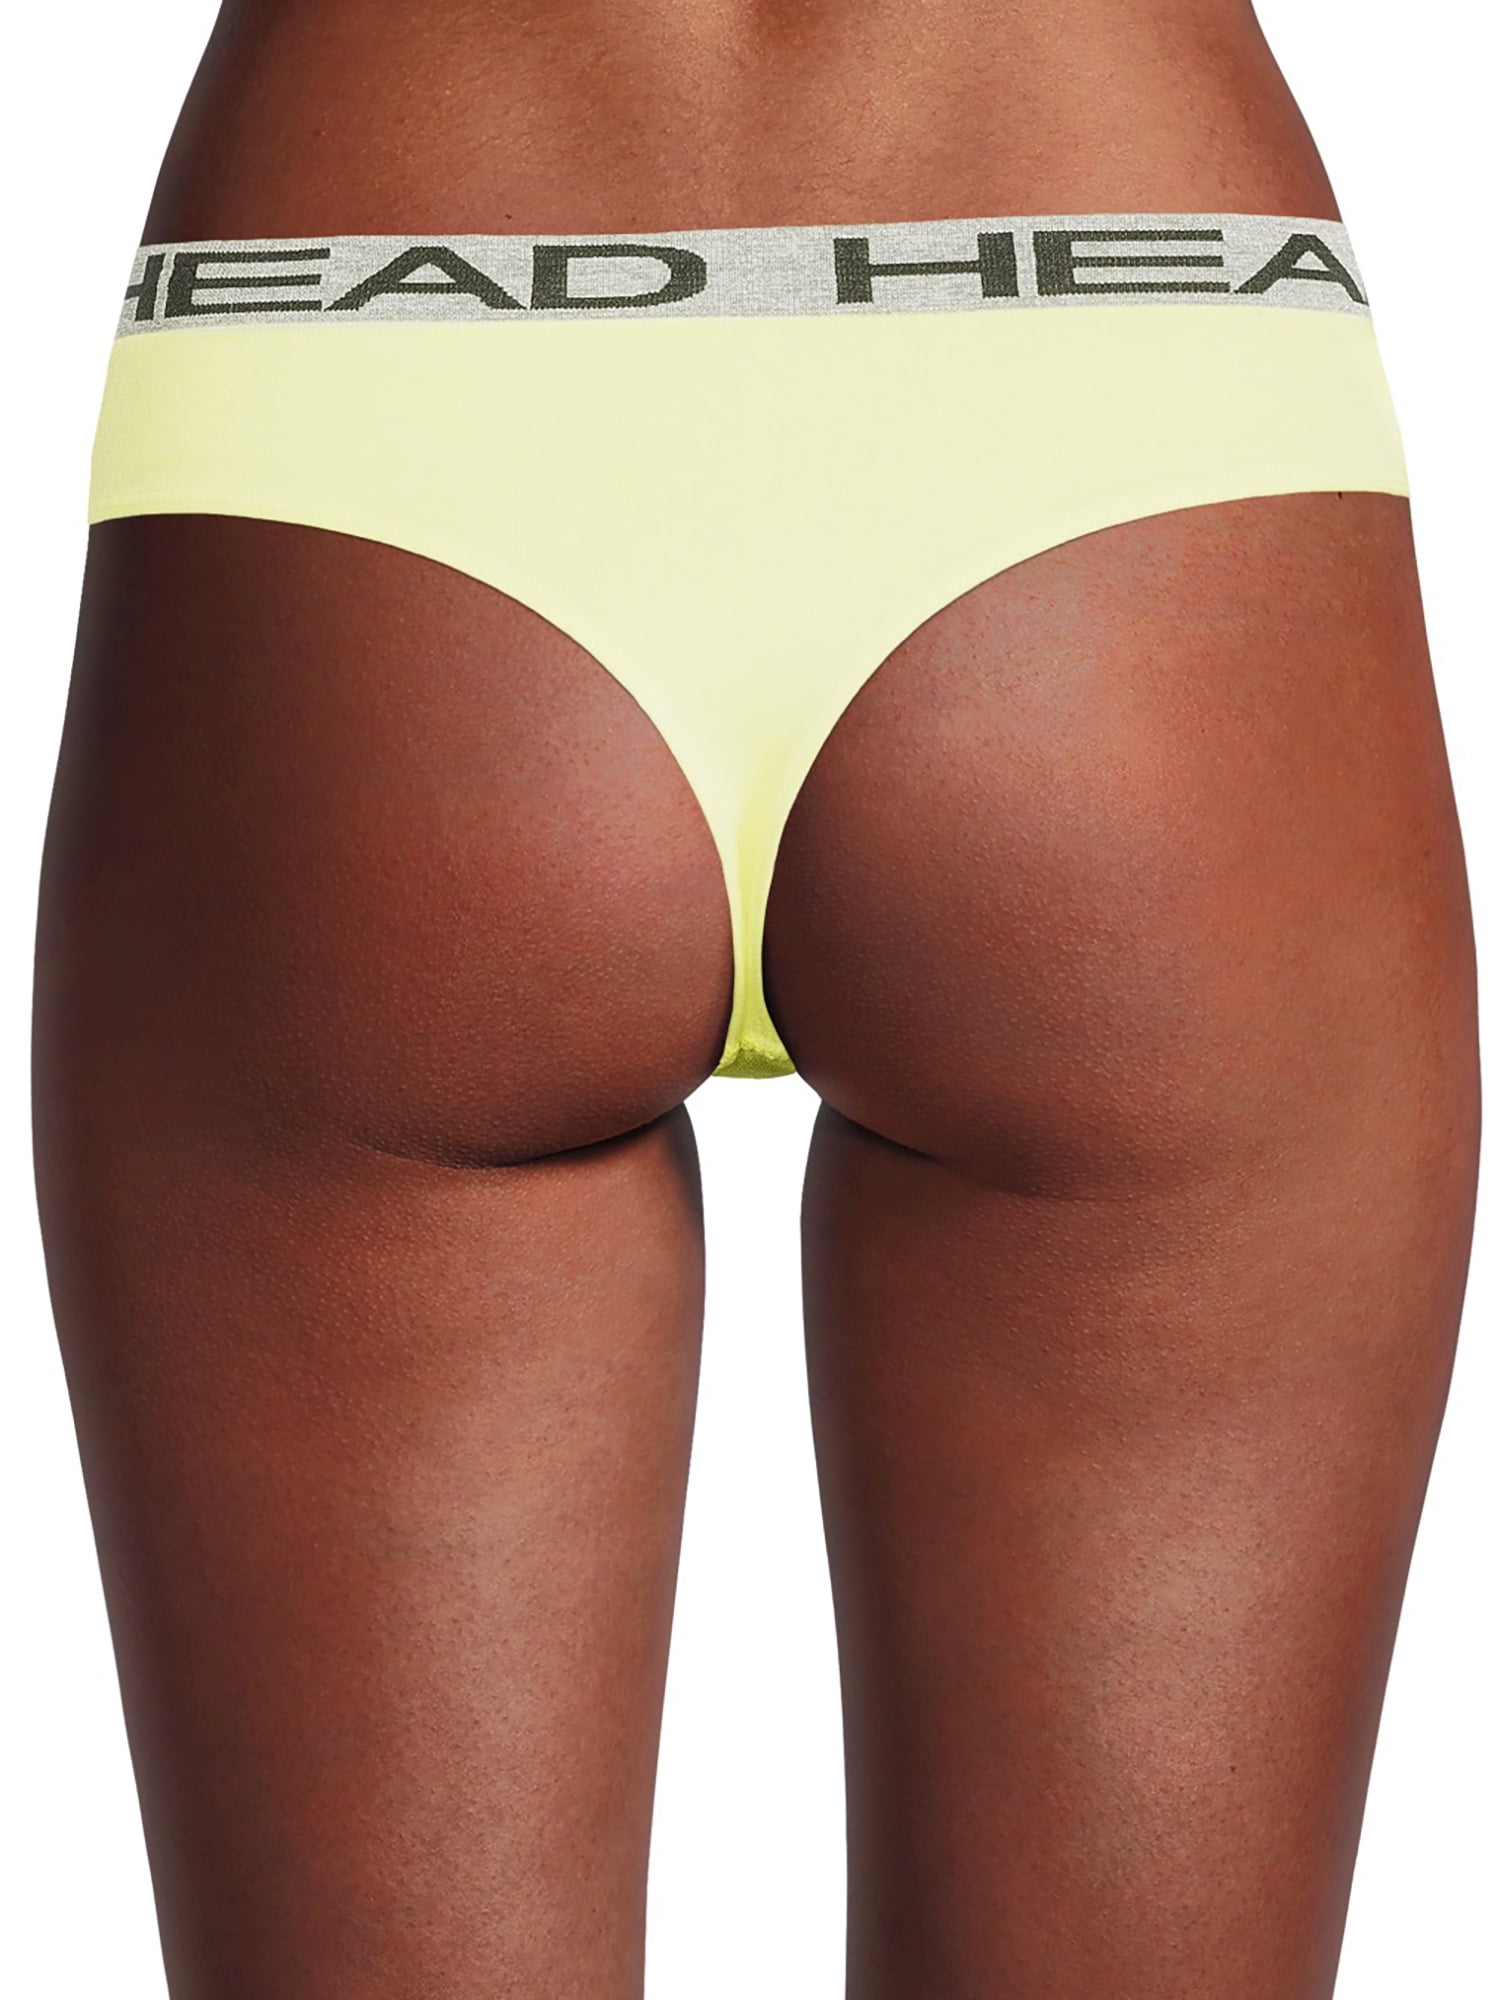 Head Women's Seamless Thong Panties, 3 Pack 